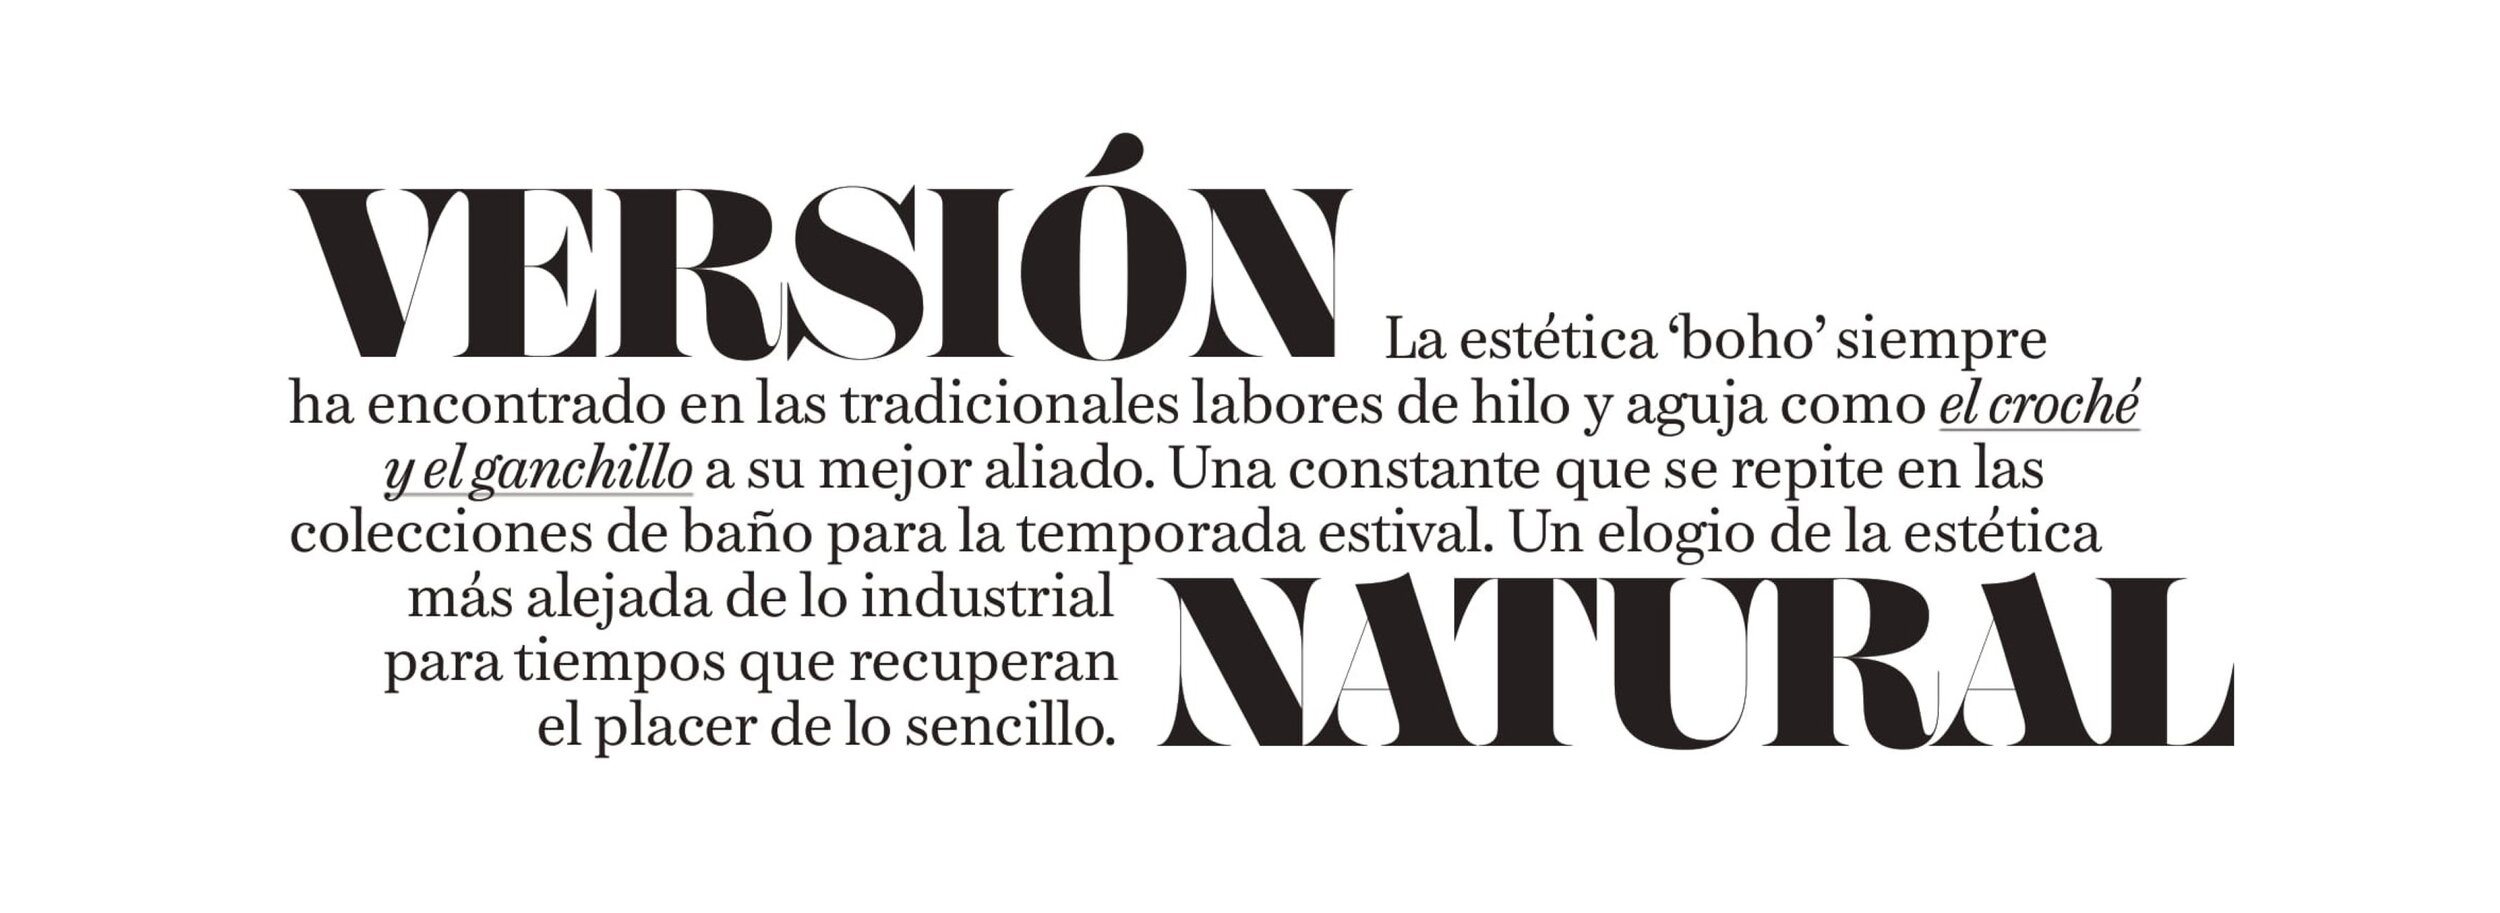 Altyn Simpson by Alvaro Beamud Cortes for Vogue Espana June 2020 (3).jpg